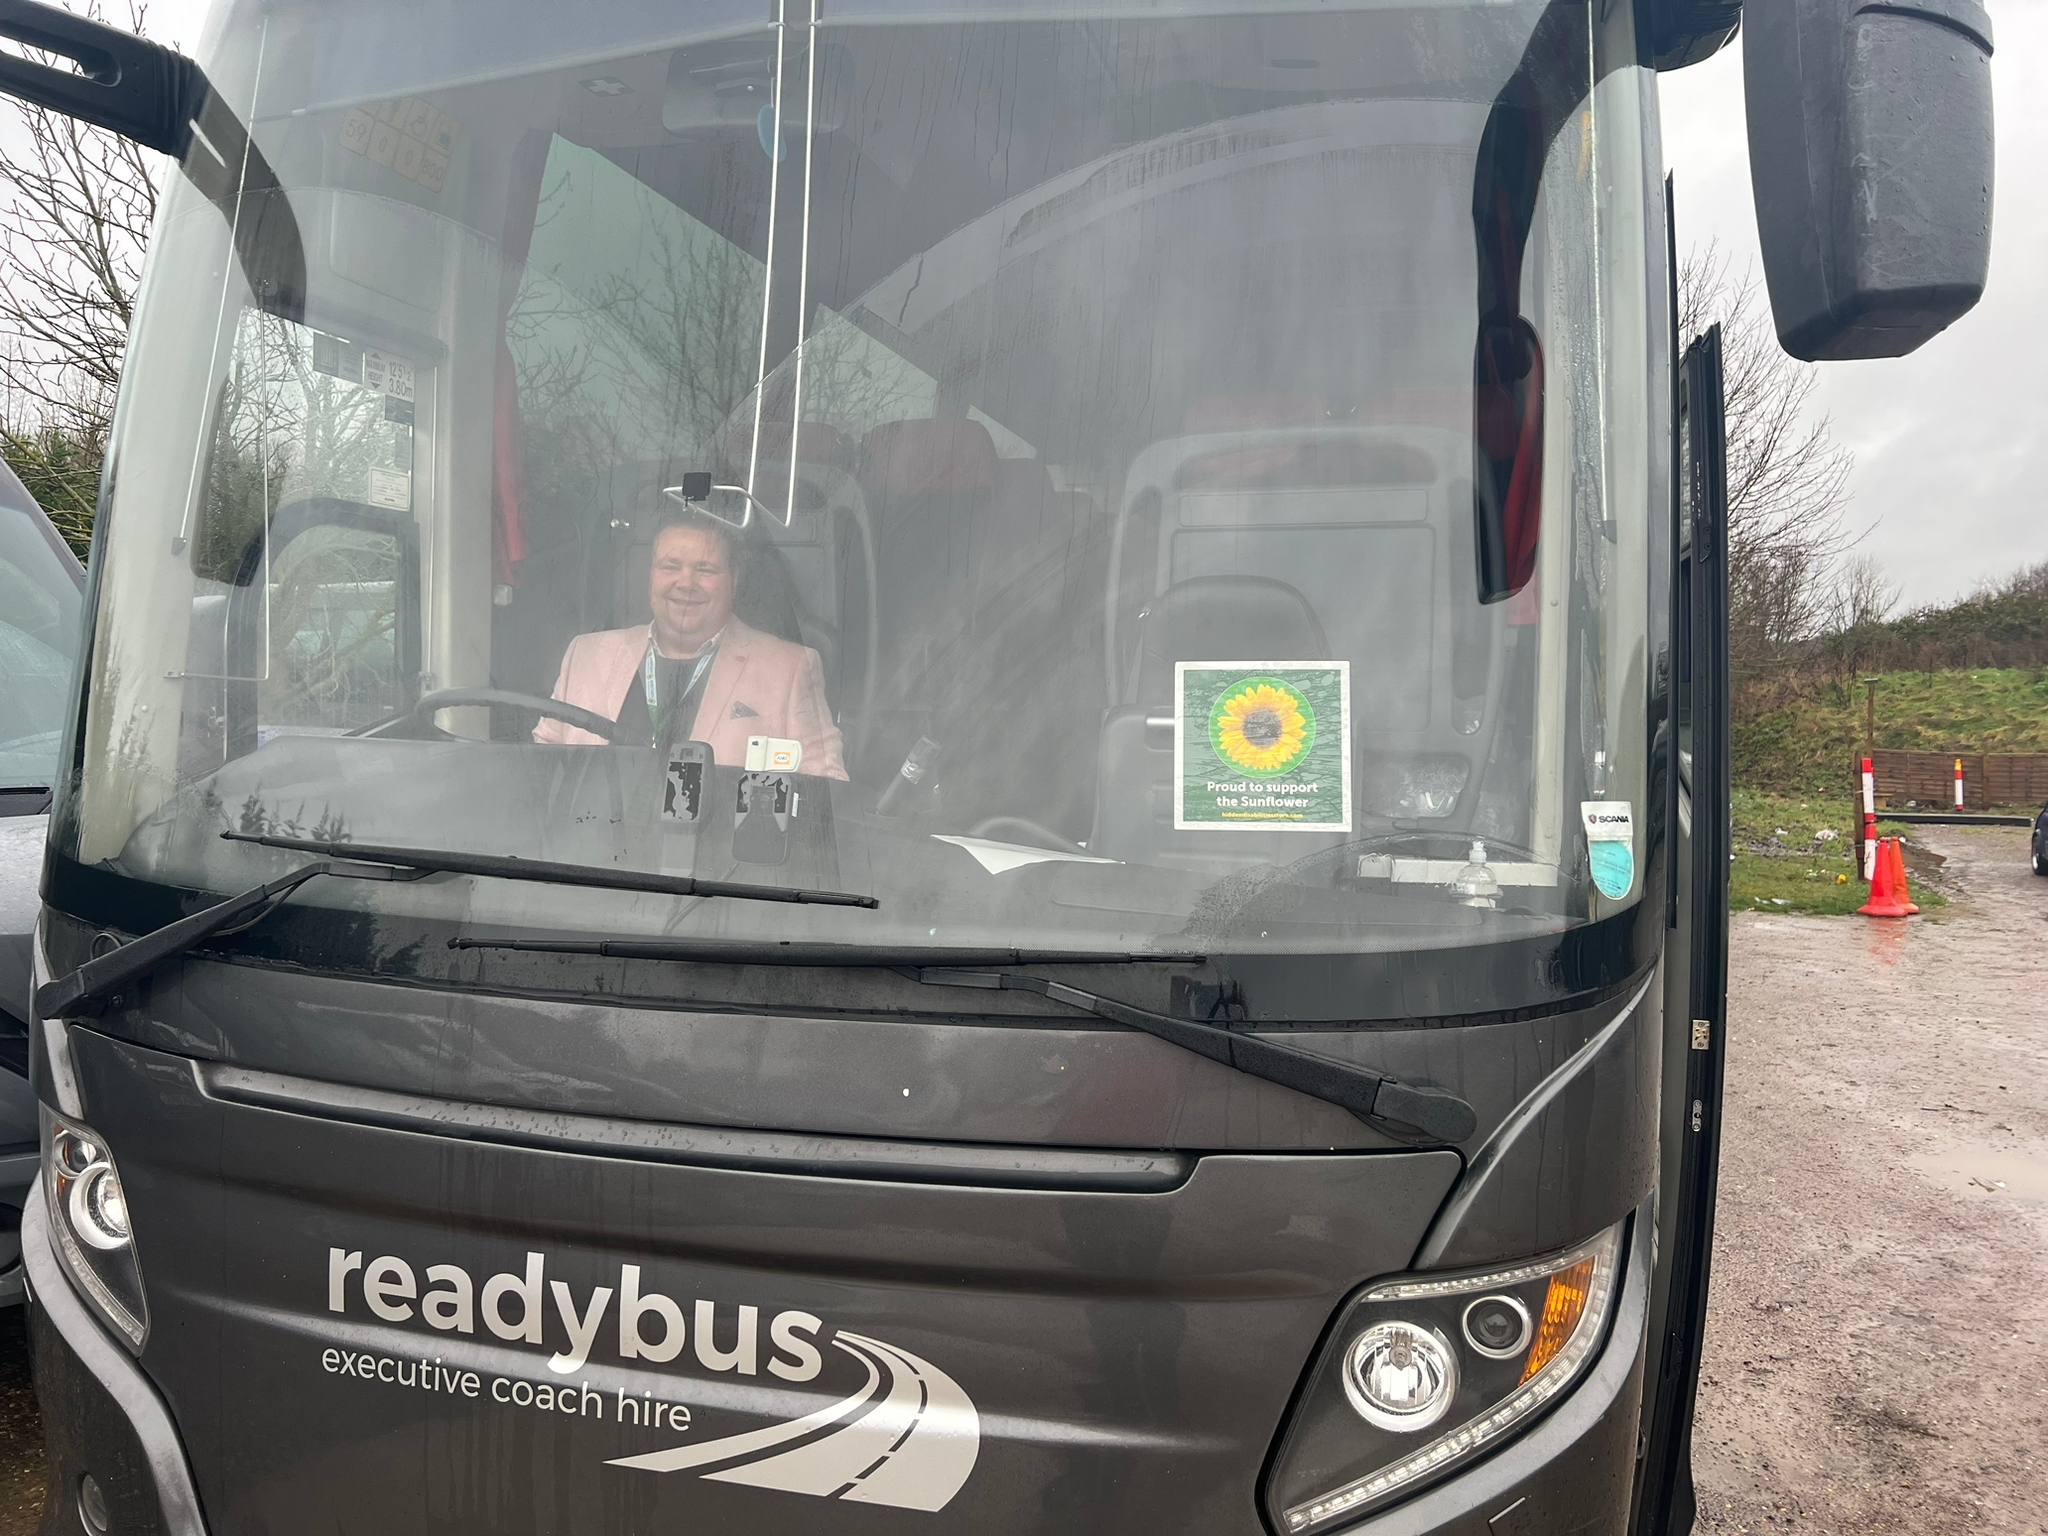 Readybus supports non-visible disability scheme